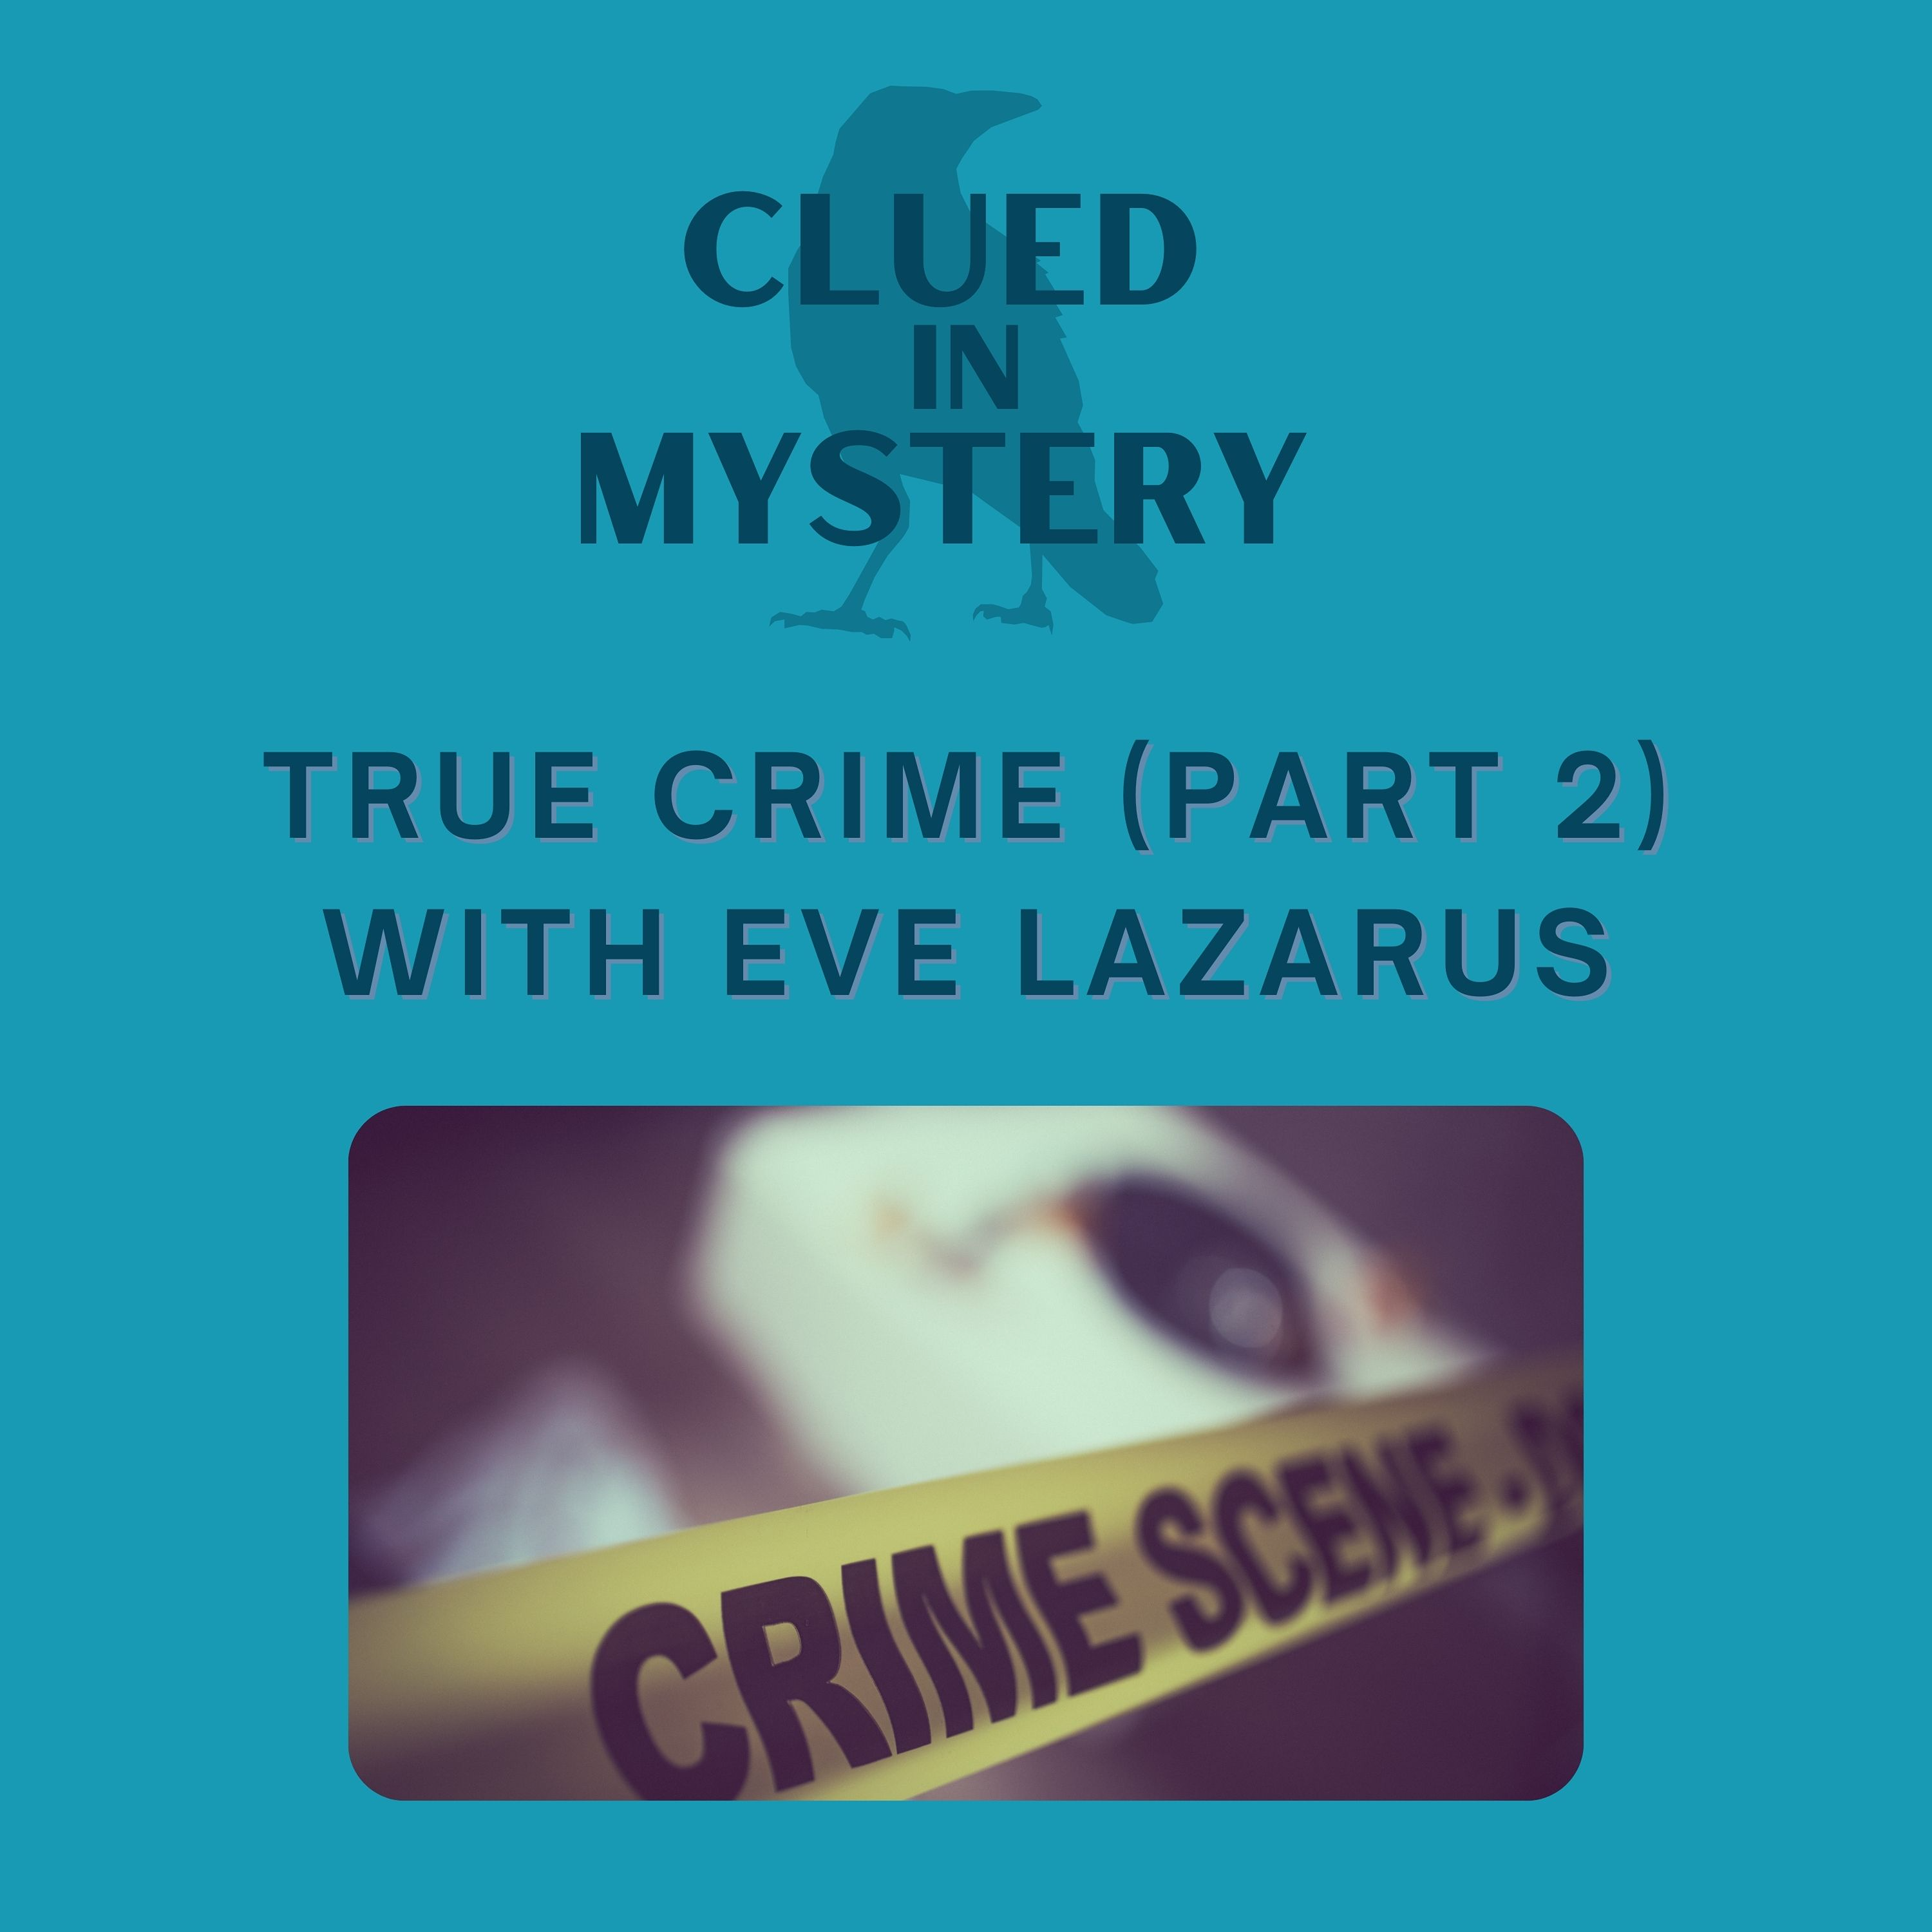 True Crime (part 2) with Eve Lazarus